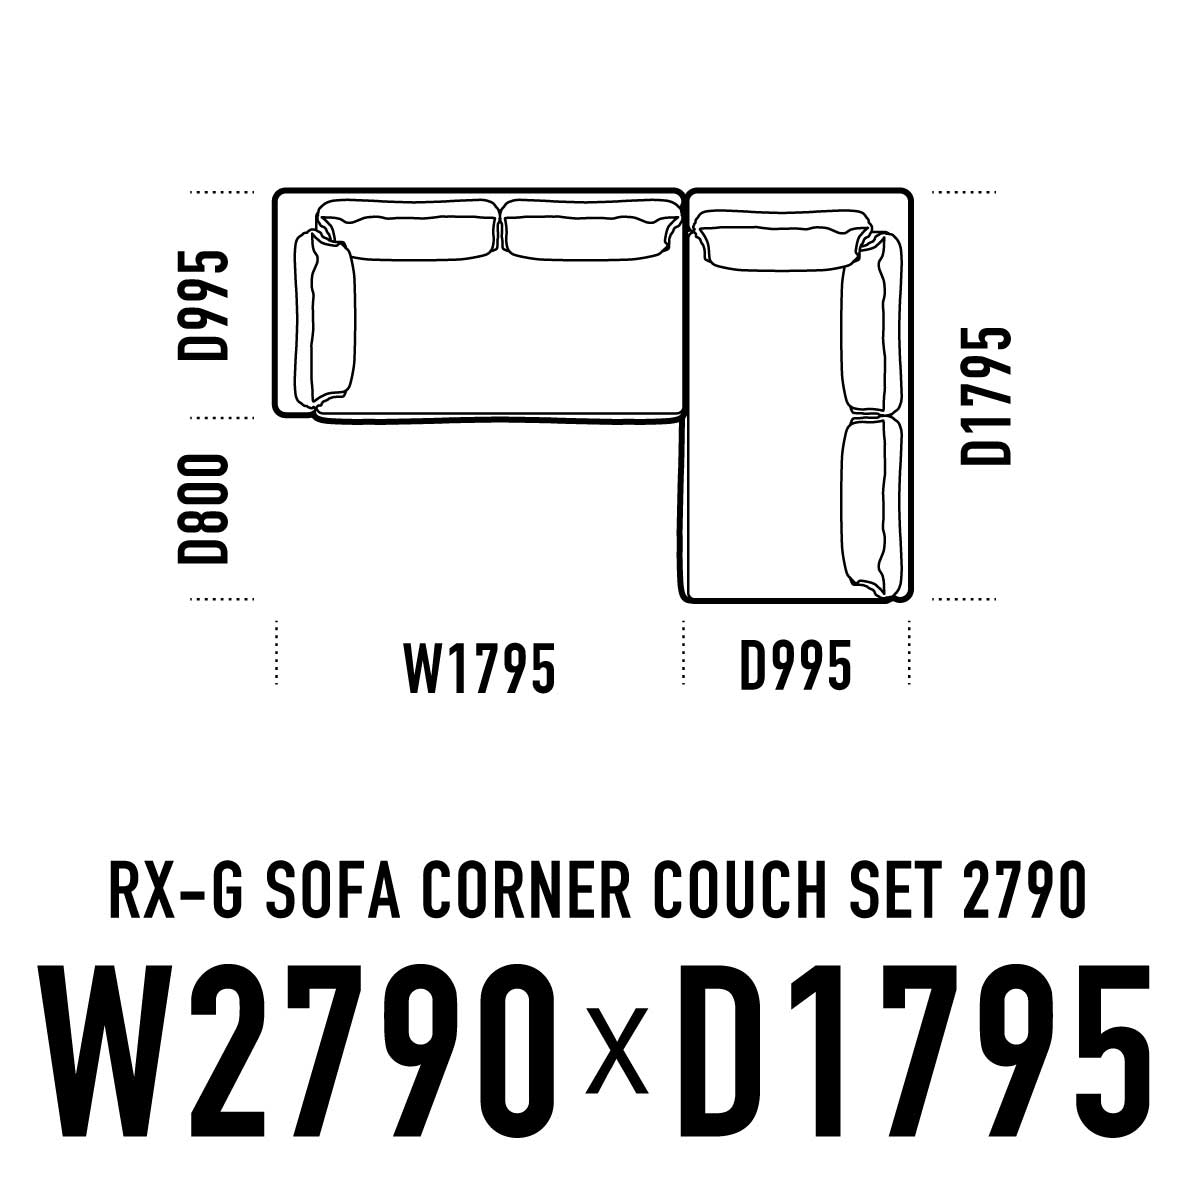 RX-Gコーナーカウチソファ W2790 D1795